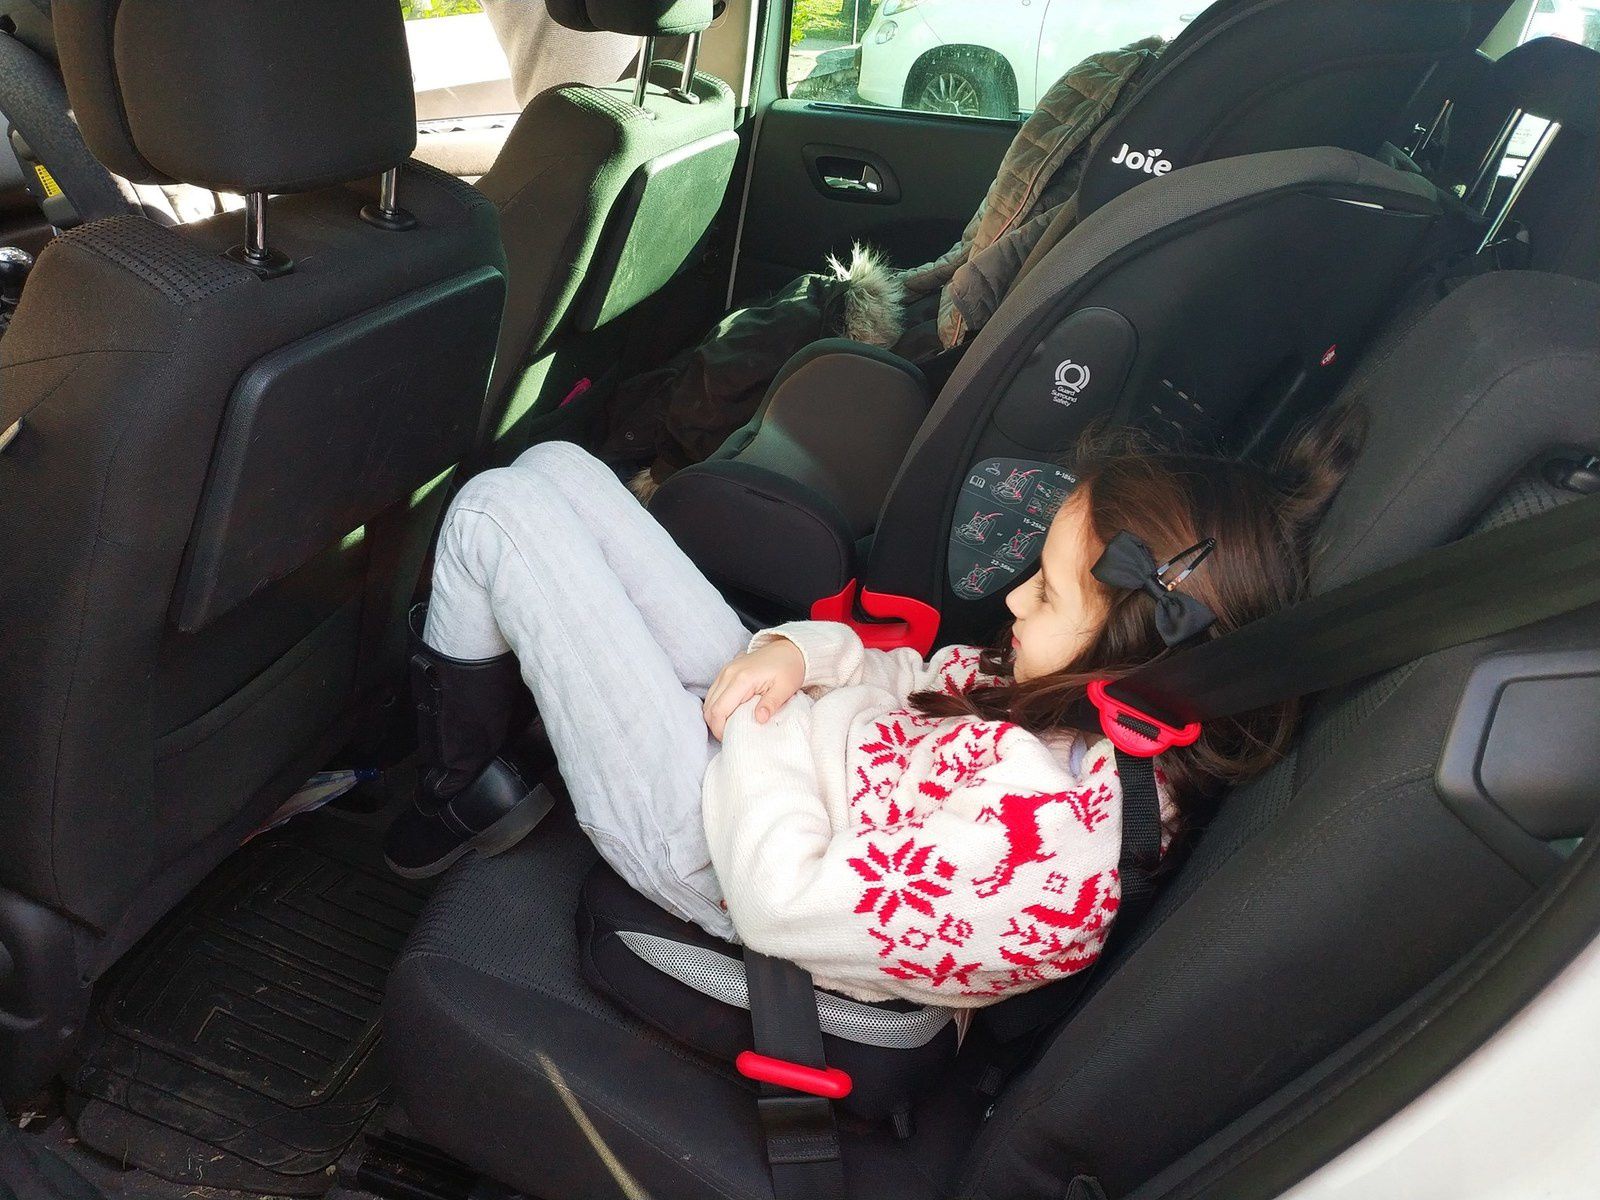 Quel siège auto choisir : siège auto Isofix ou ceinture ?